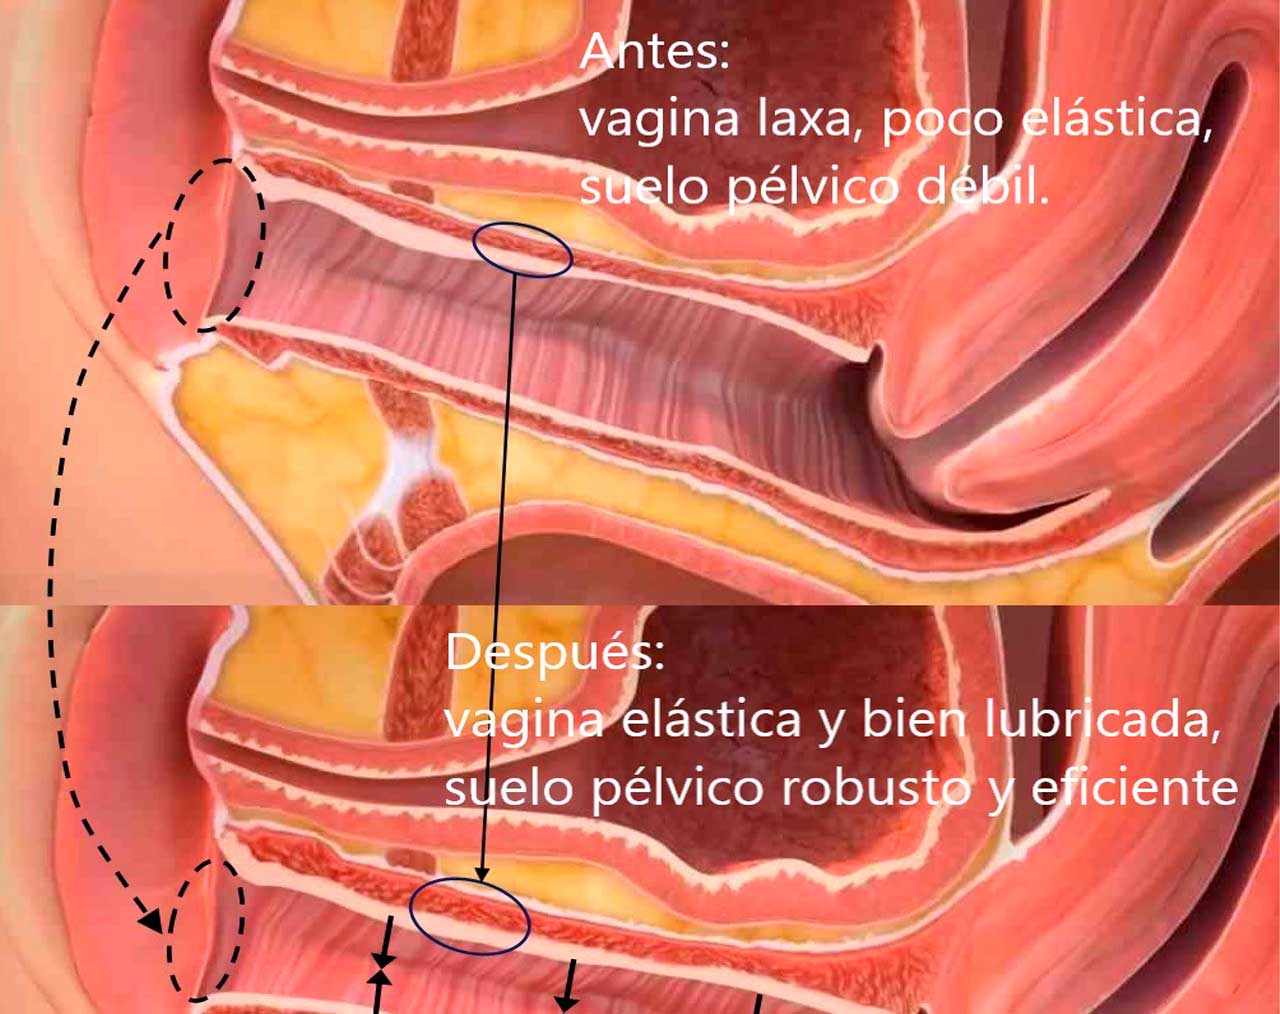 rejuvenecimiento-vaginal-ginecologo-almeria